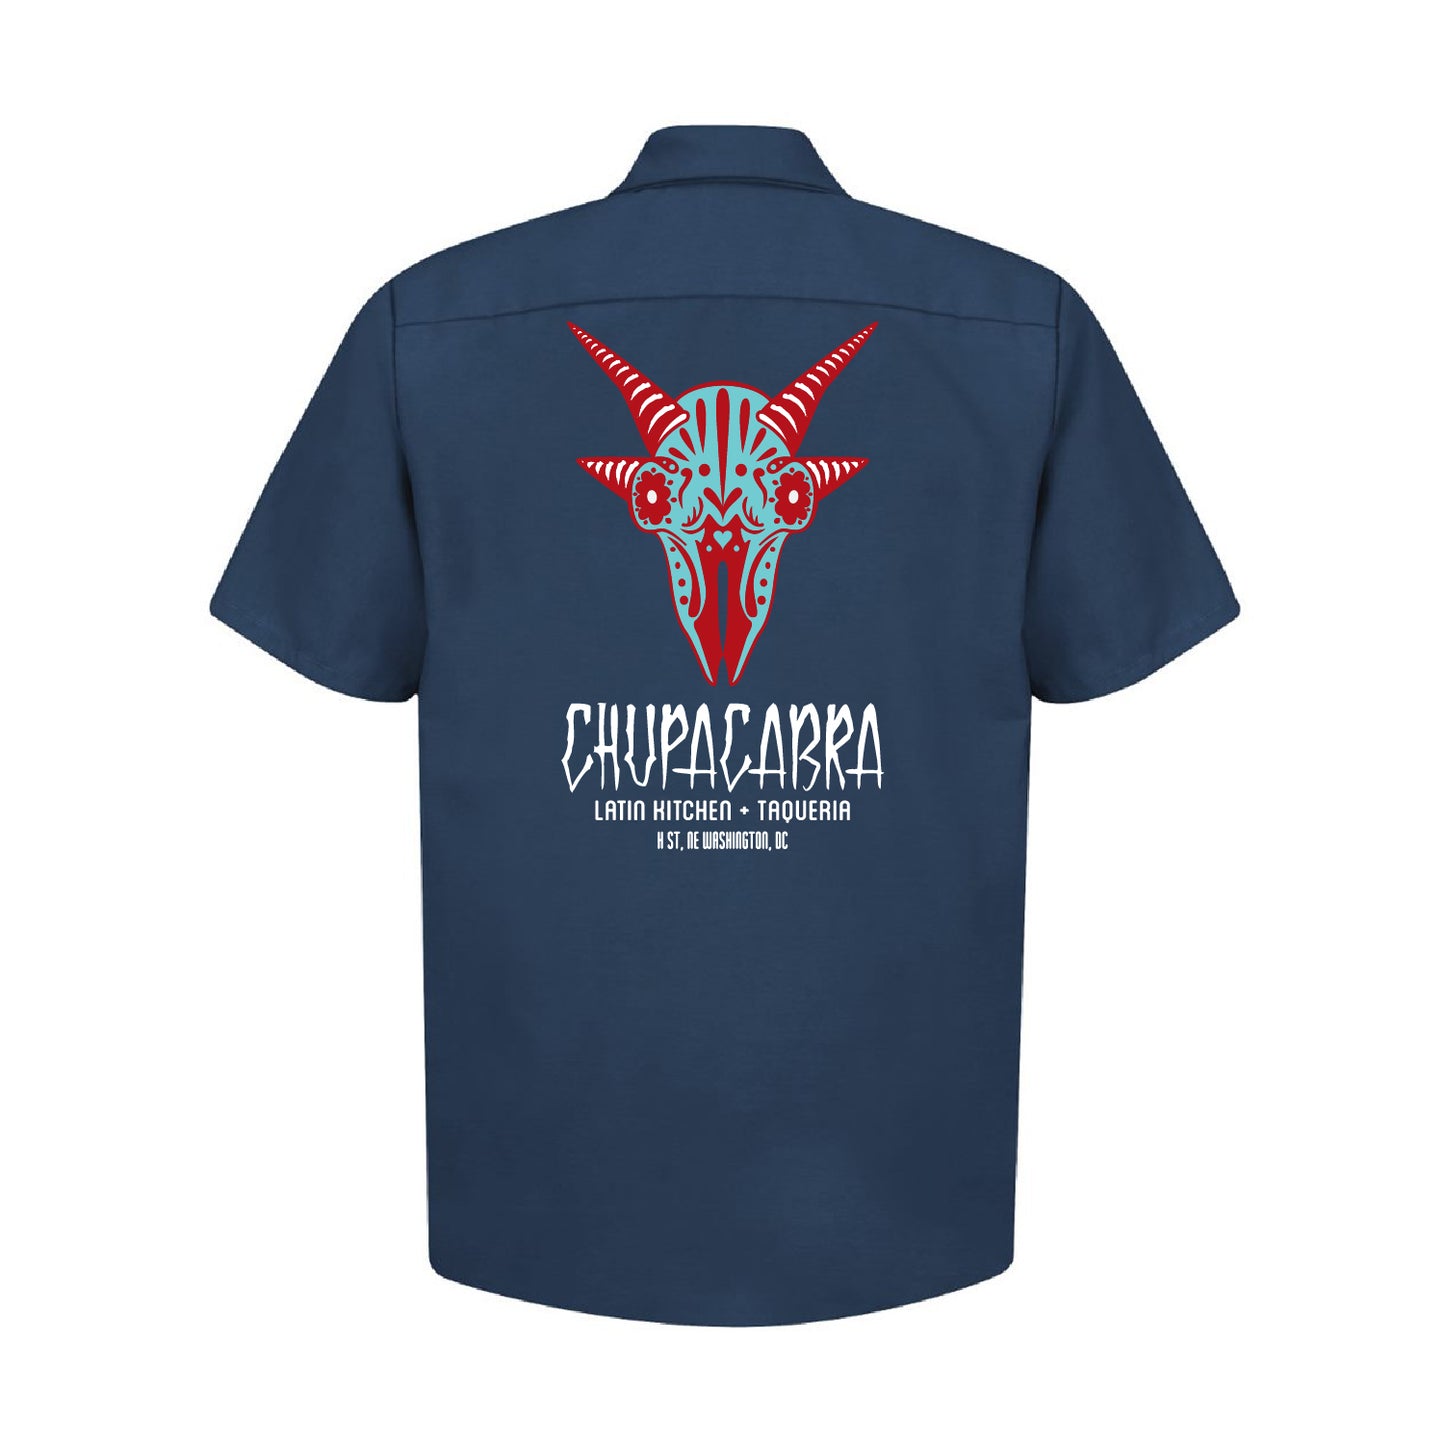 Chupacabra Industrial Short Sleeve Work Shirt